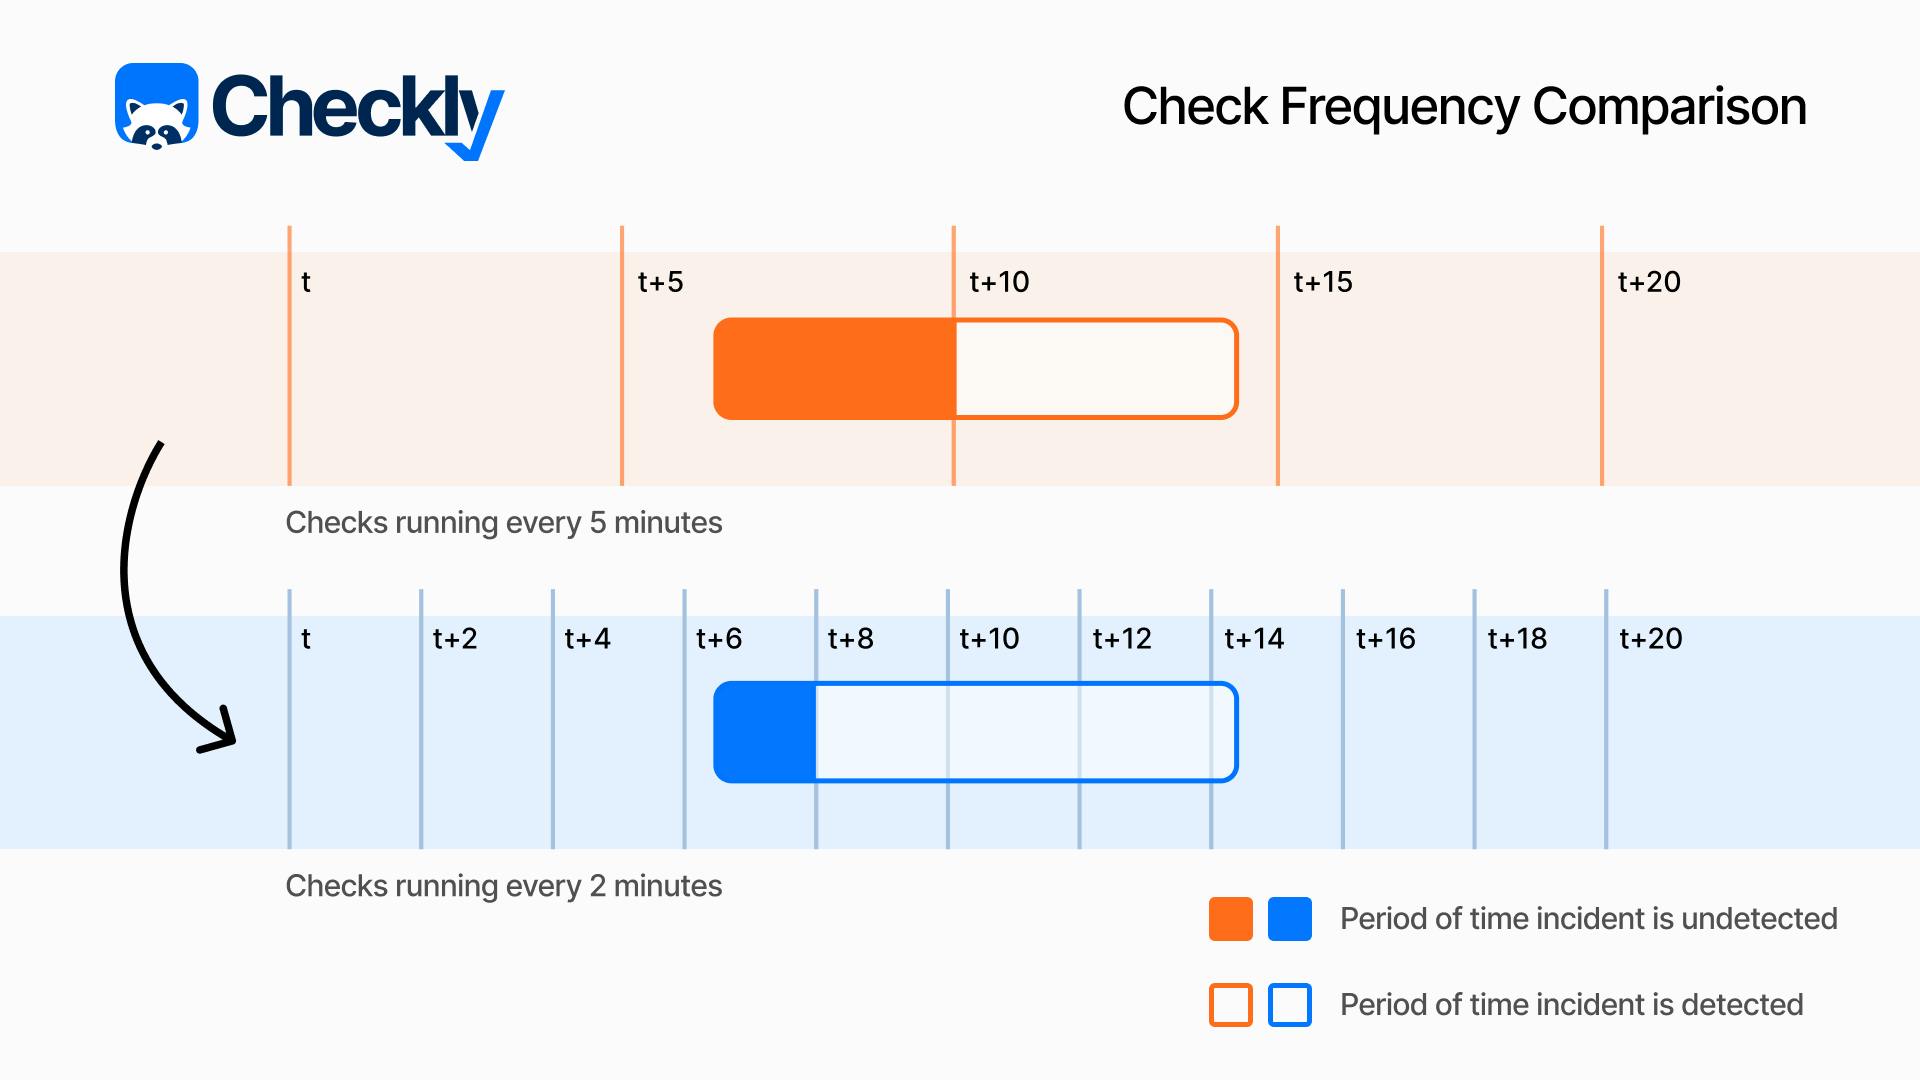 Checkly check frequency comparison